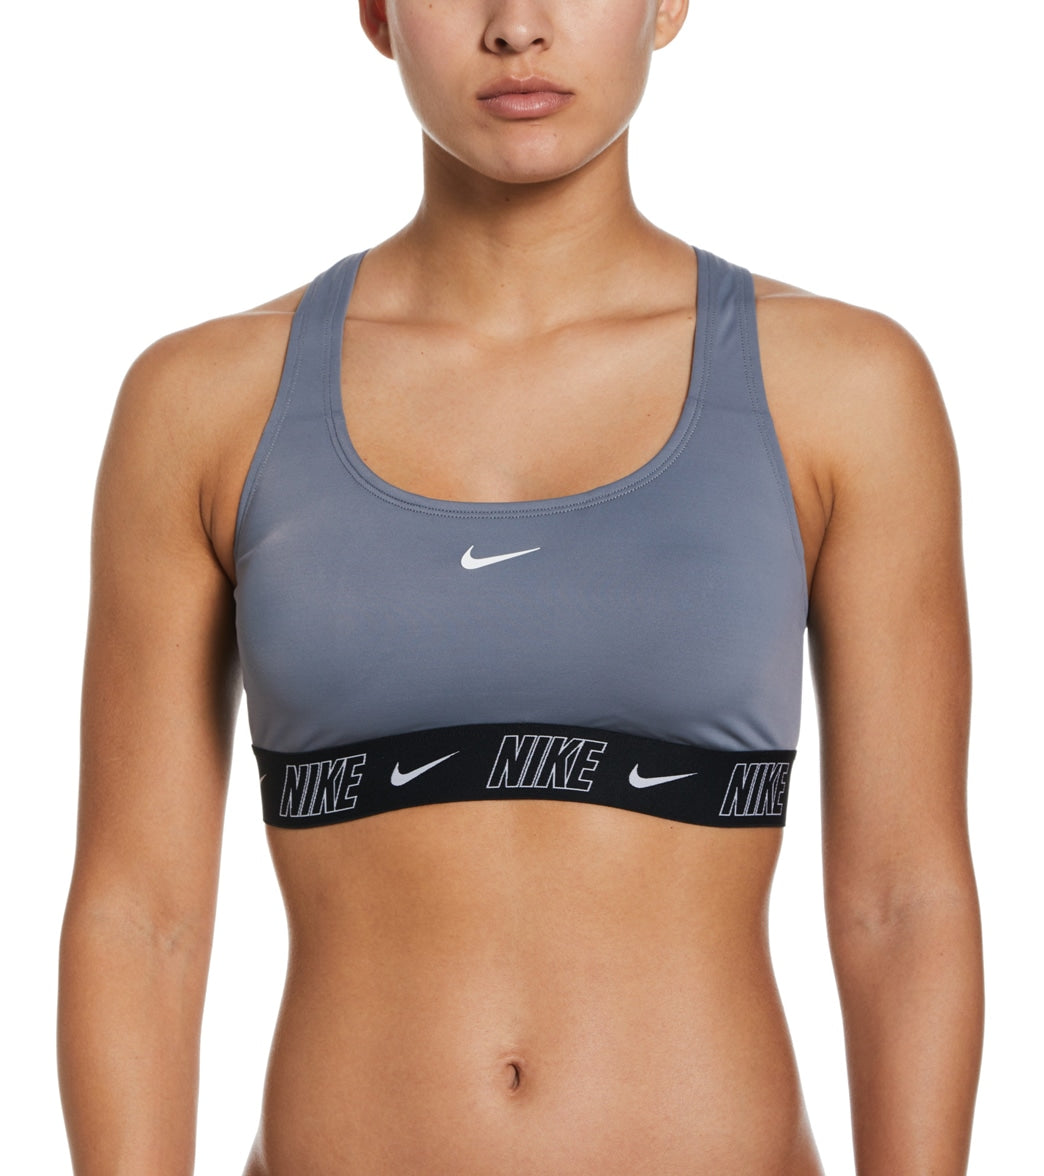 Nike Women's Bikini Top at SwimOutlet.com